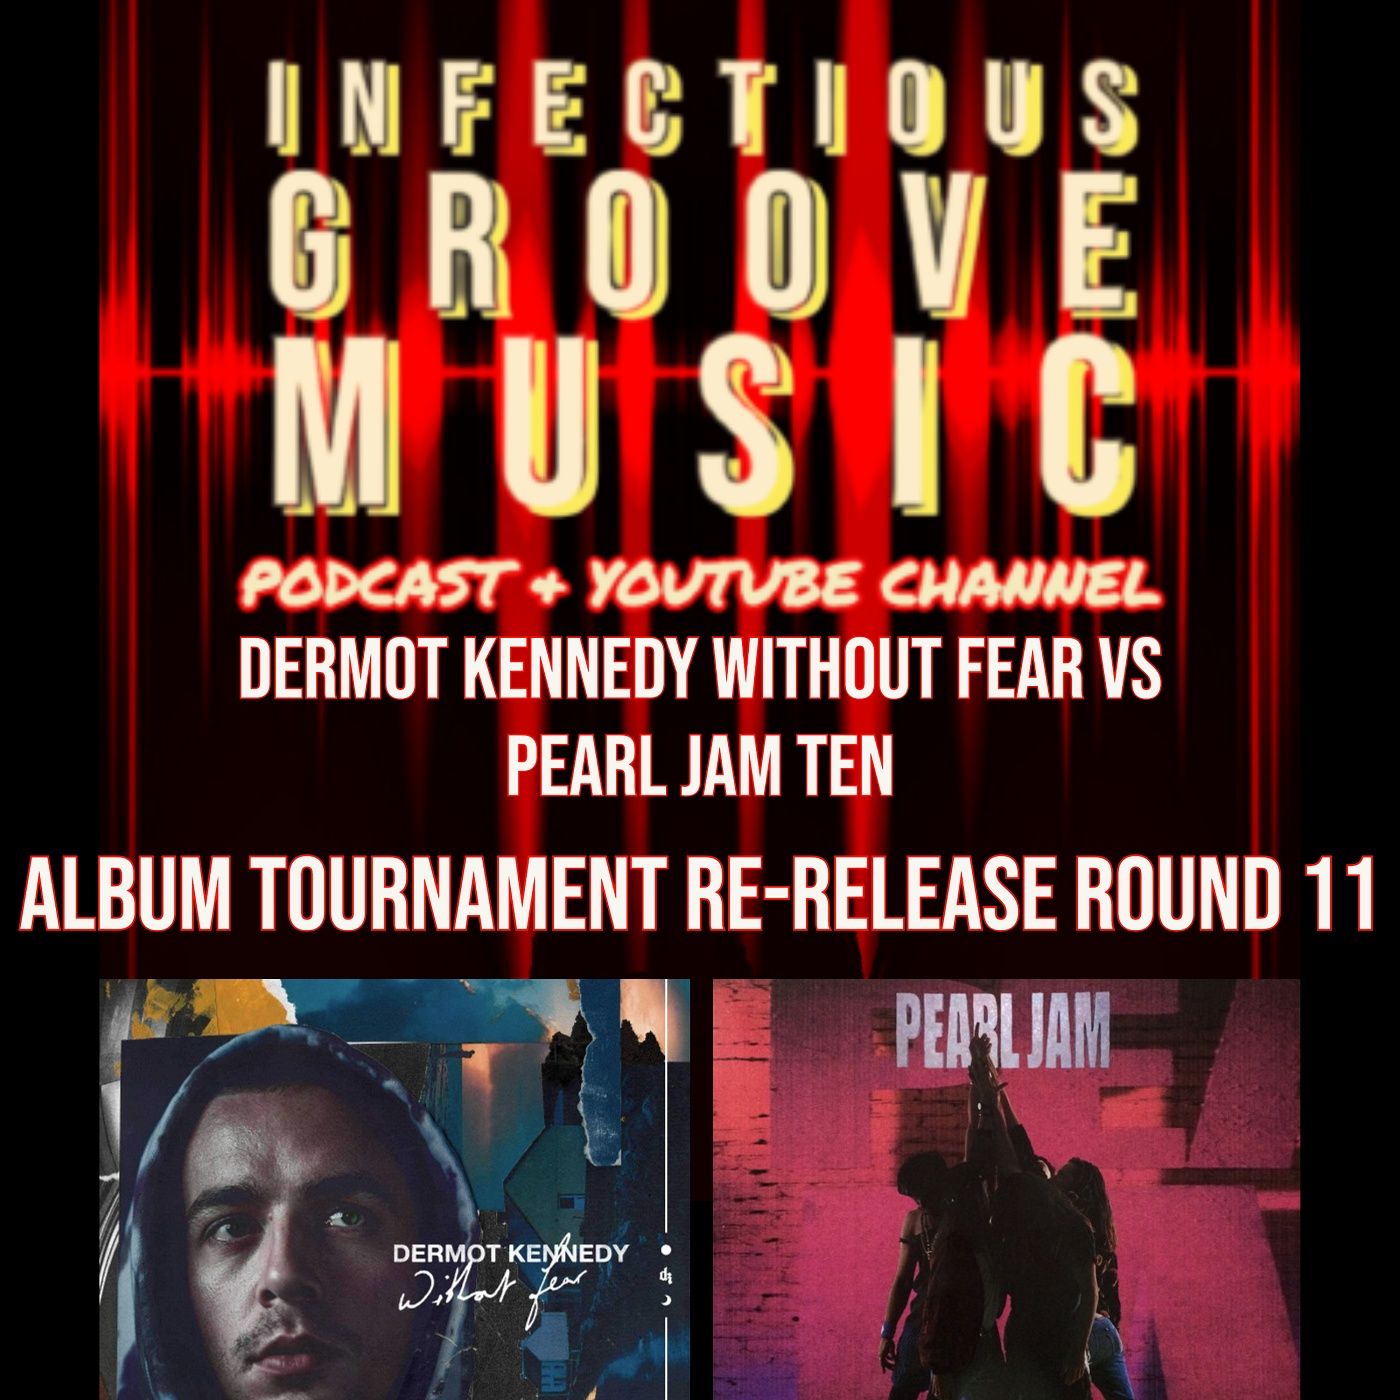 Album Tournament Re-Release Round 11 - Dermot Kennedy Vs Pearl Jam